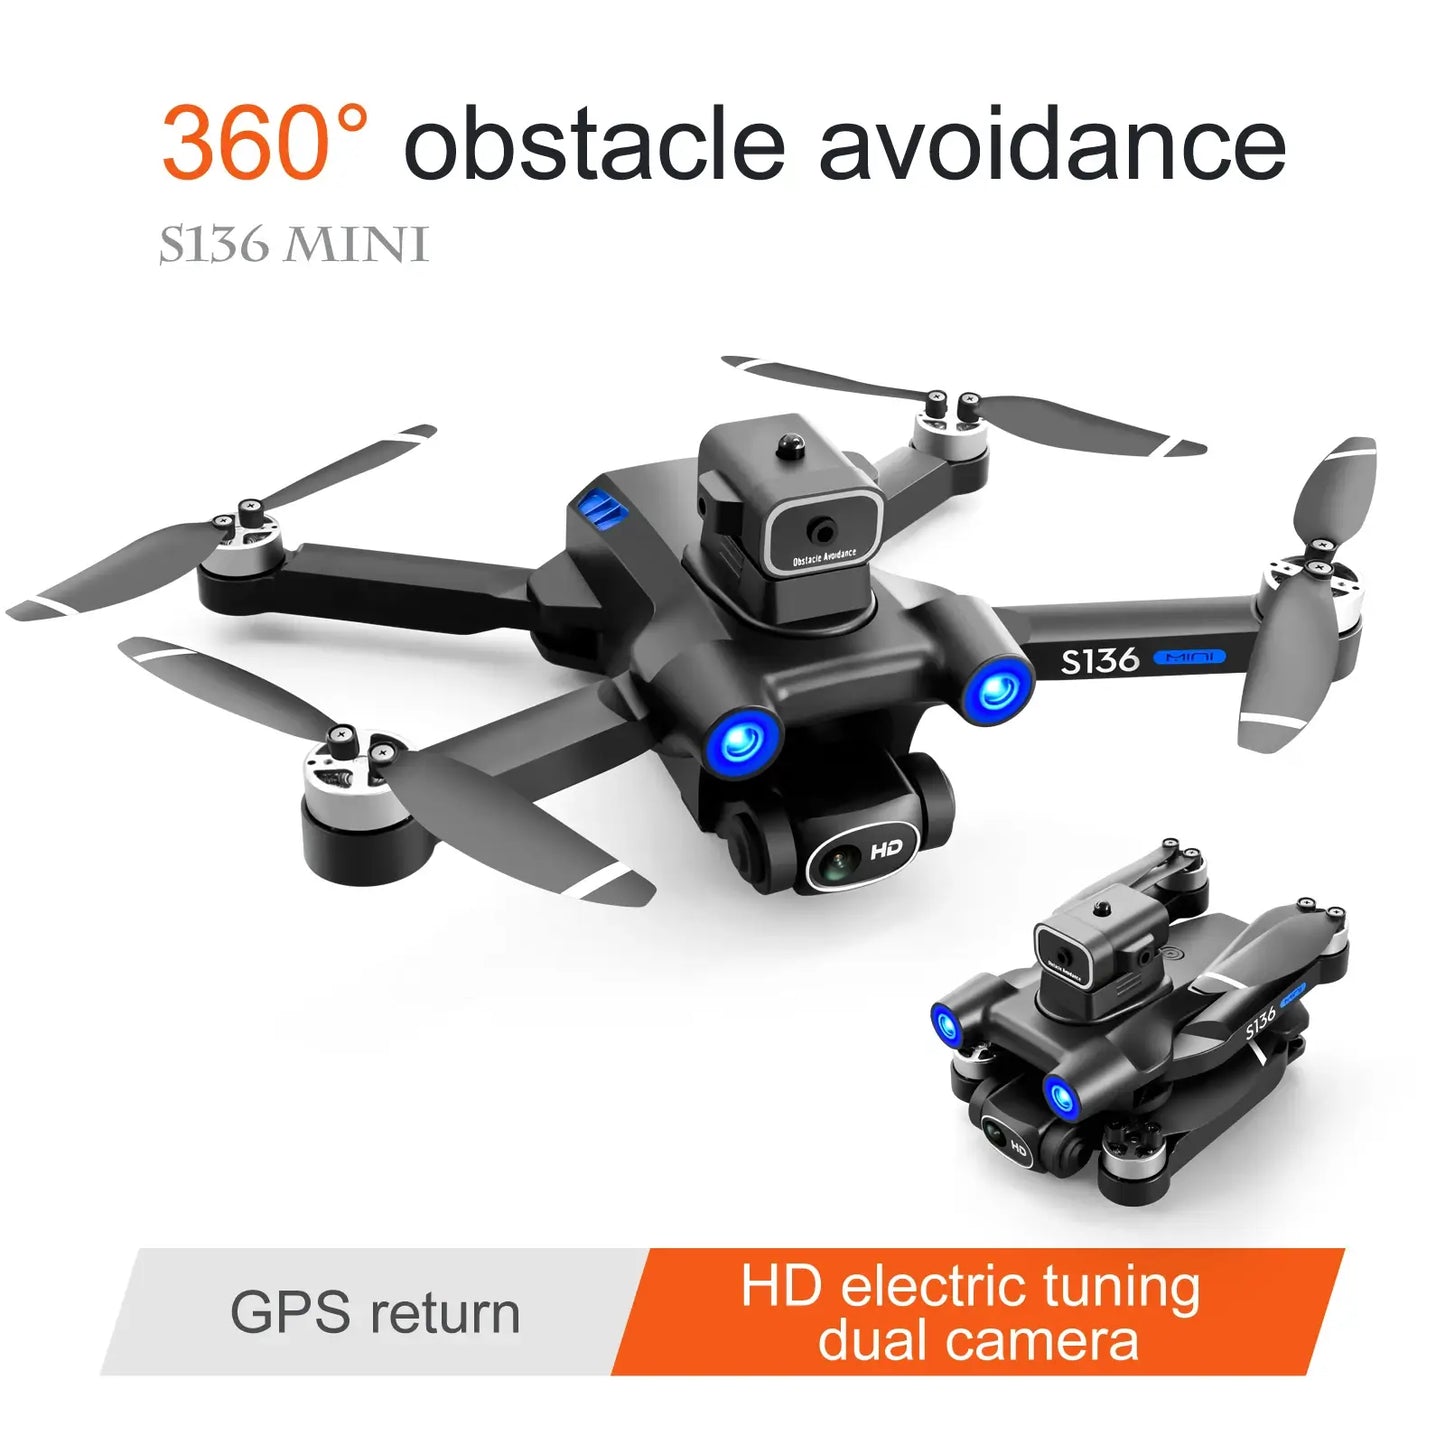 High-quality 4K drone